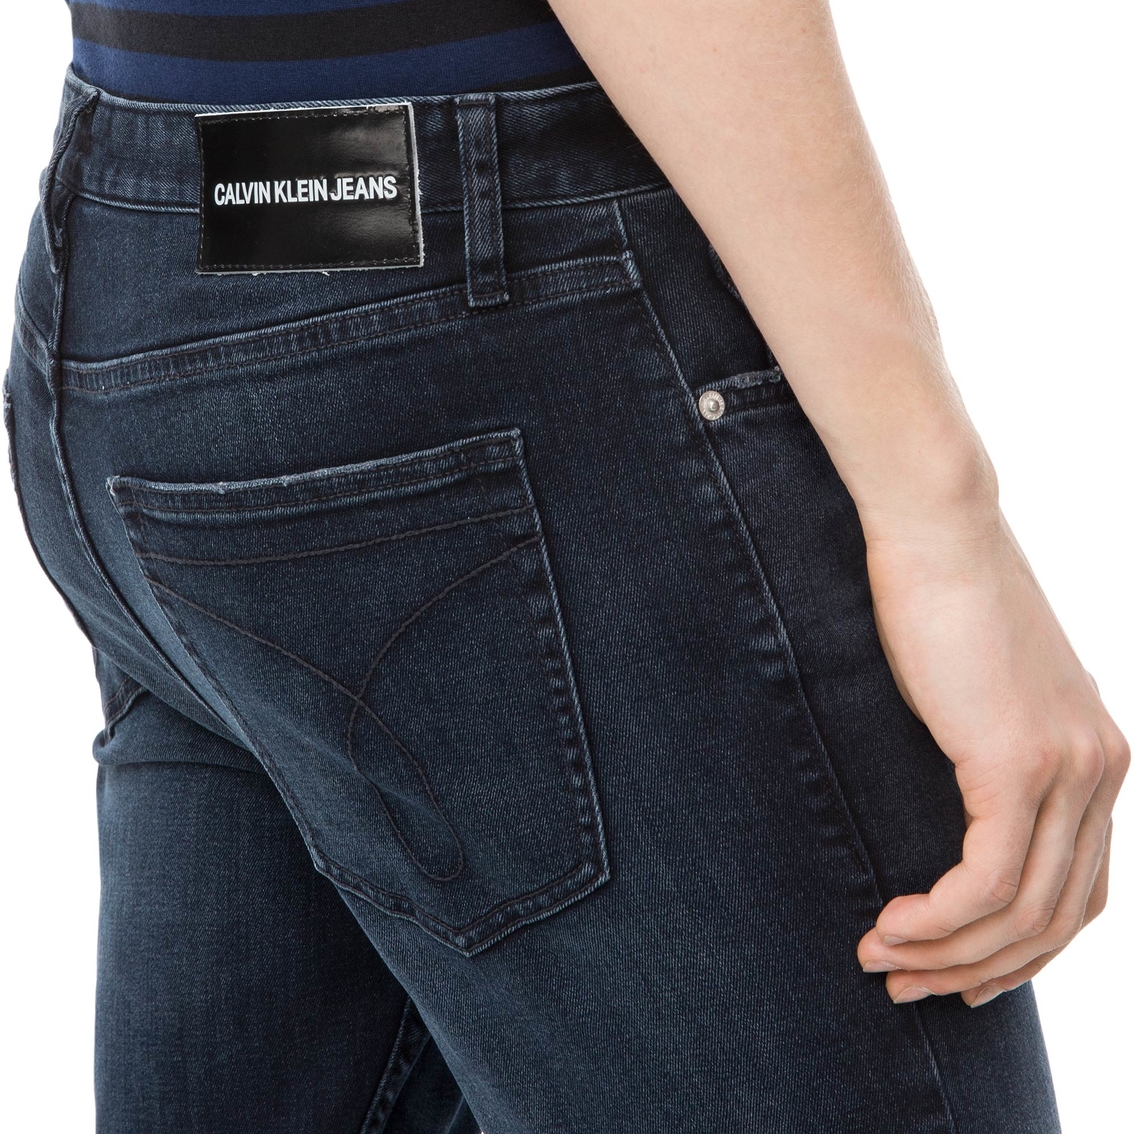 Shop Exchange Boston Klein Blue Black Calvin | The & Jeans Jeans Jeans Accessories Clothing | Slim |